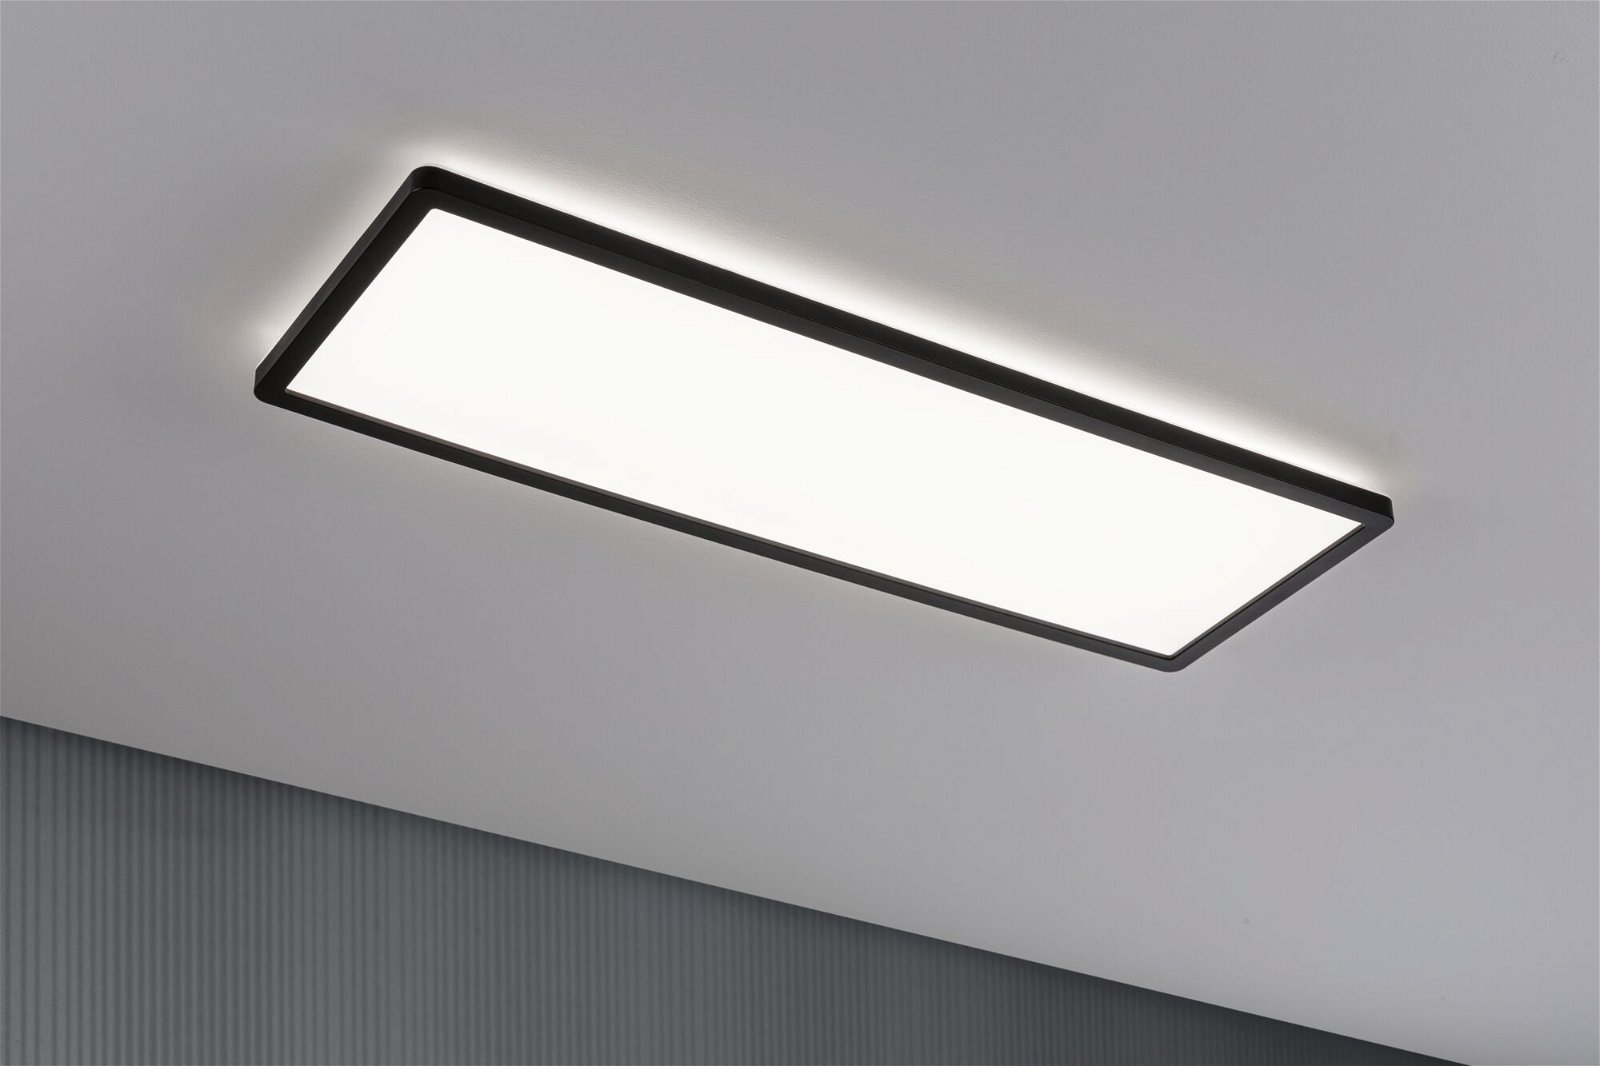 LED Panel 3-Step-Dim Atria Shine Backlight square 580x200mm 22W 1800lm 4000K Black dimmable